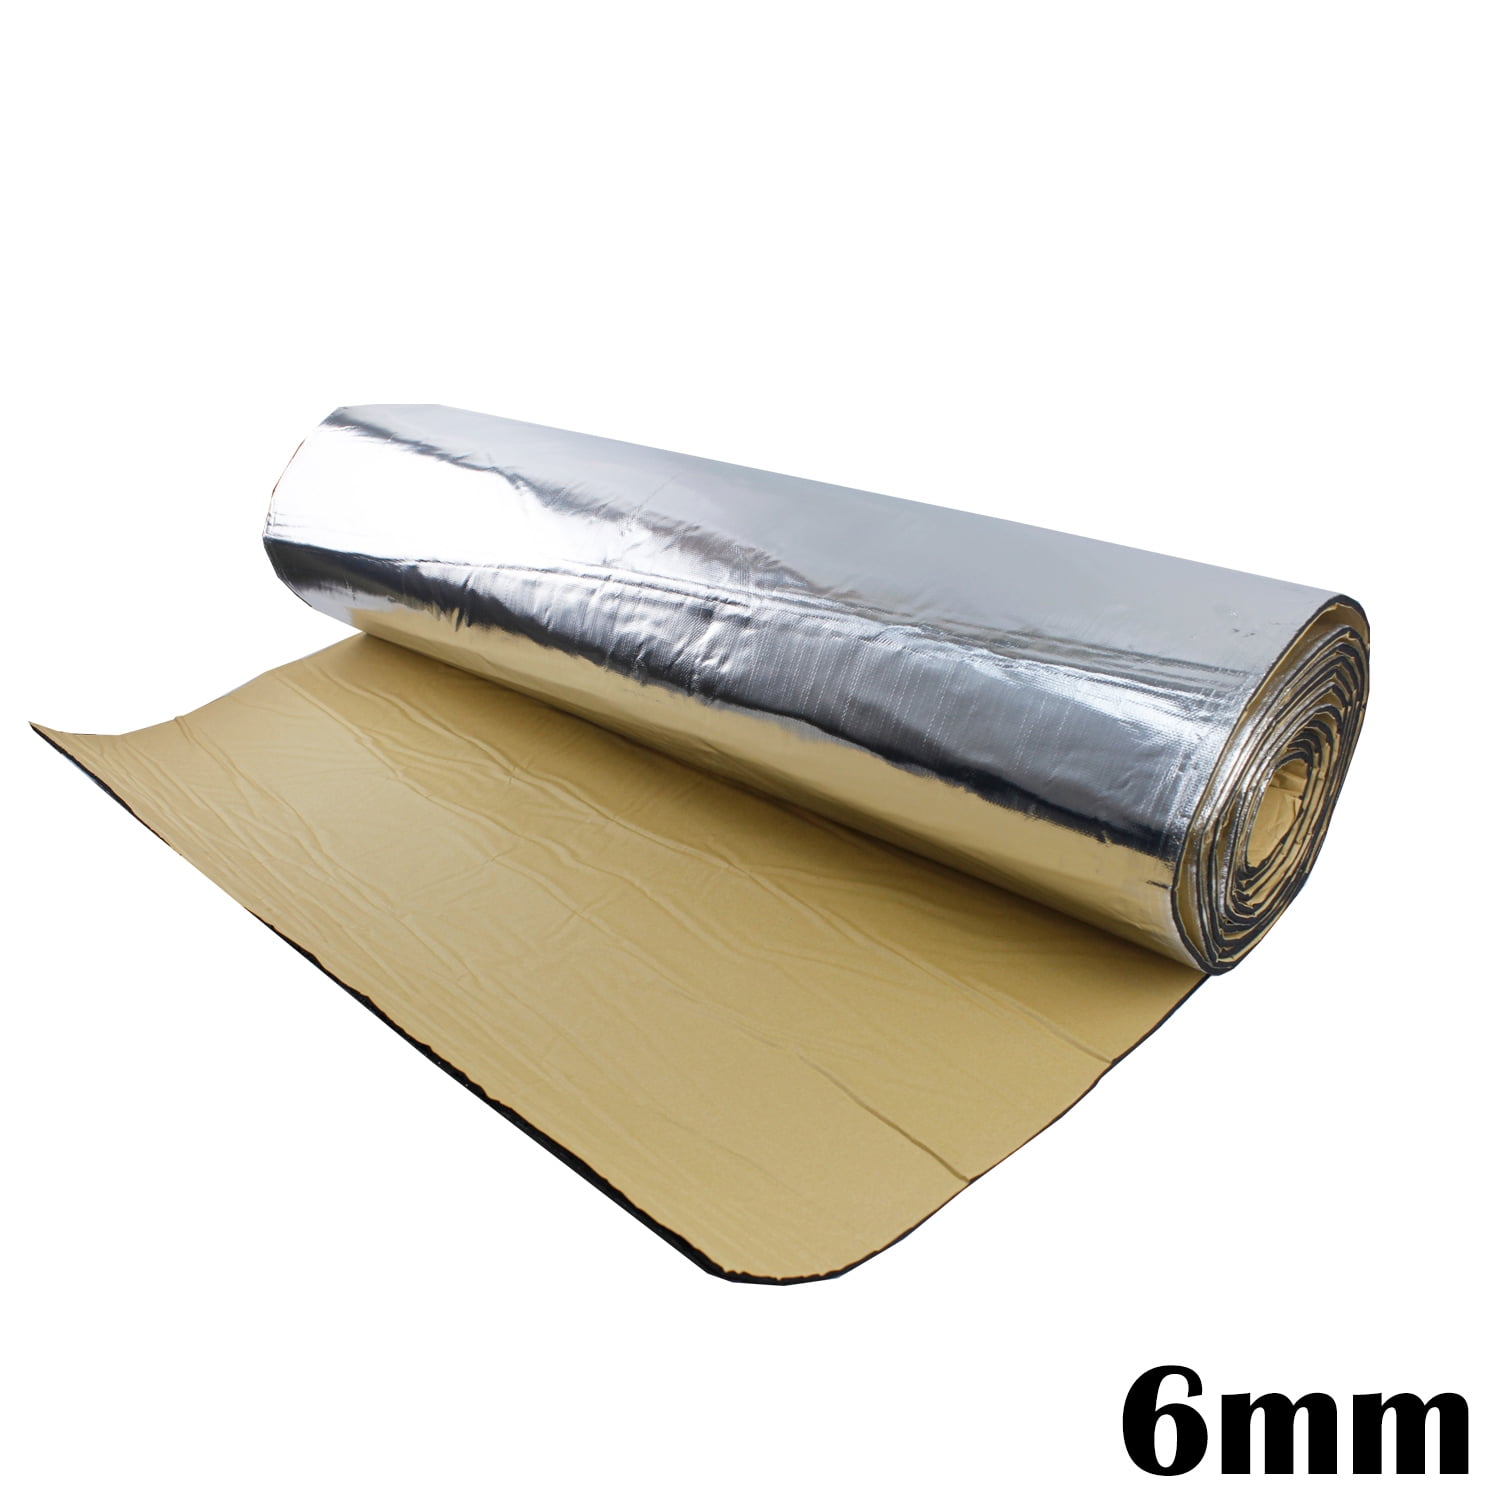 Manan Butyl Rubber Sound Deadener Roll Thicker Heat Shield Sound